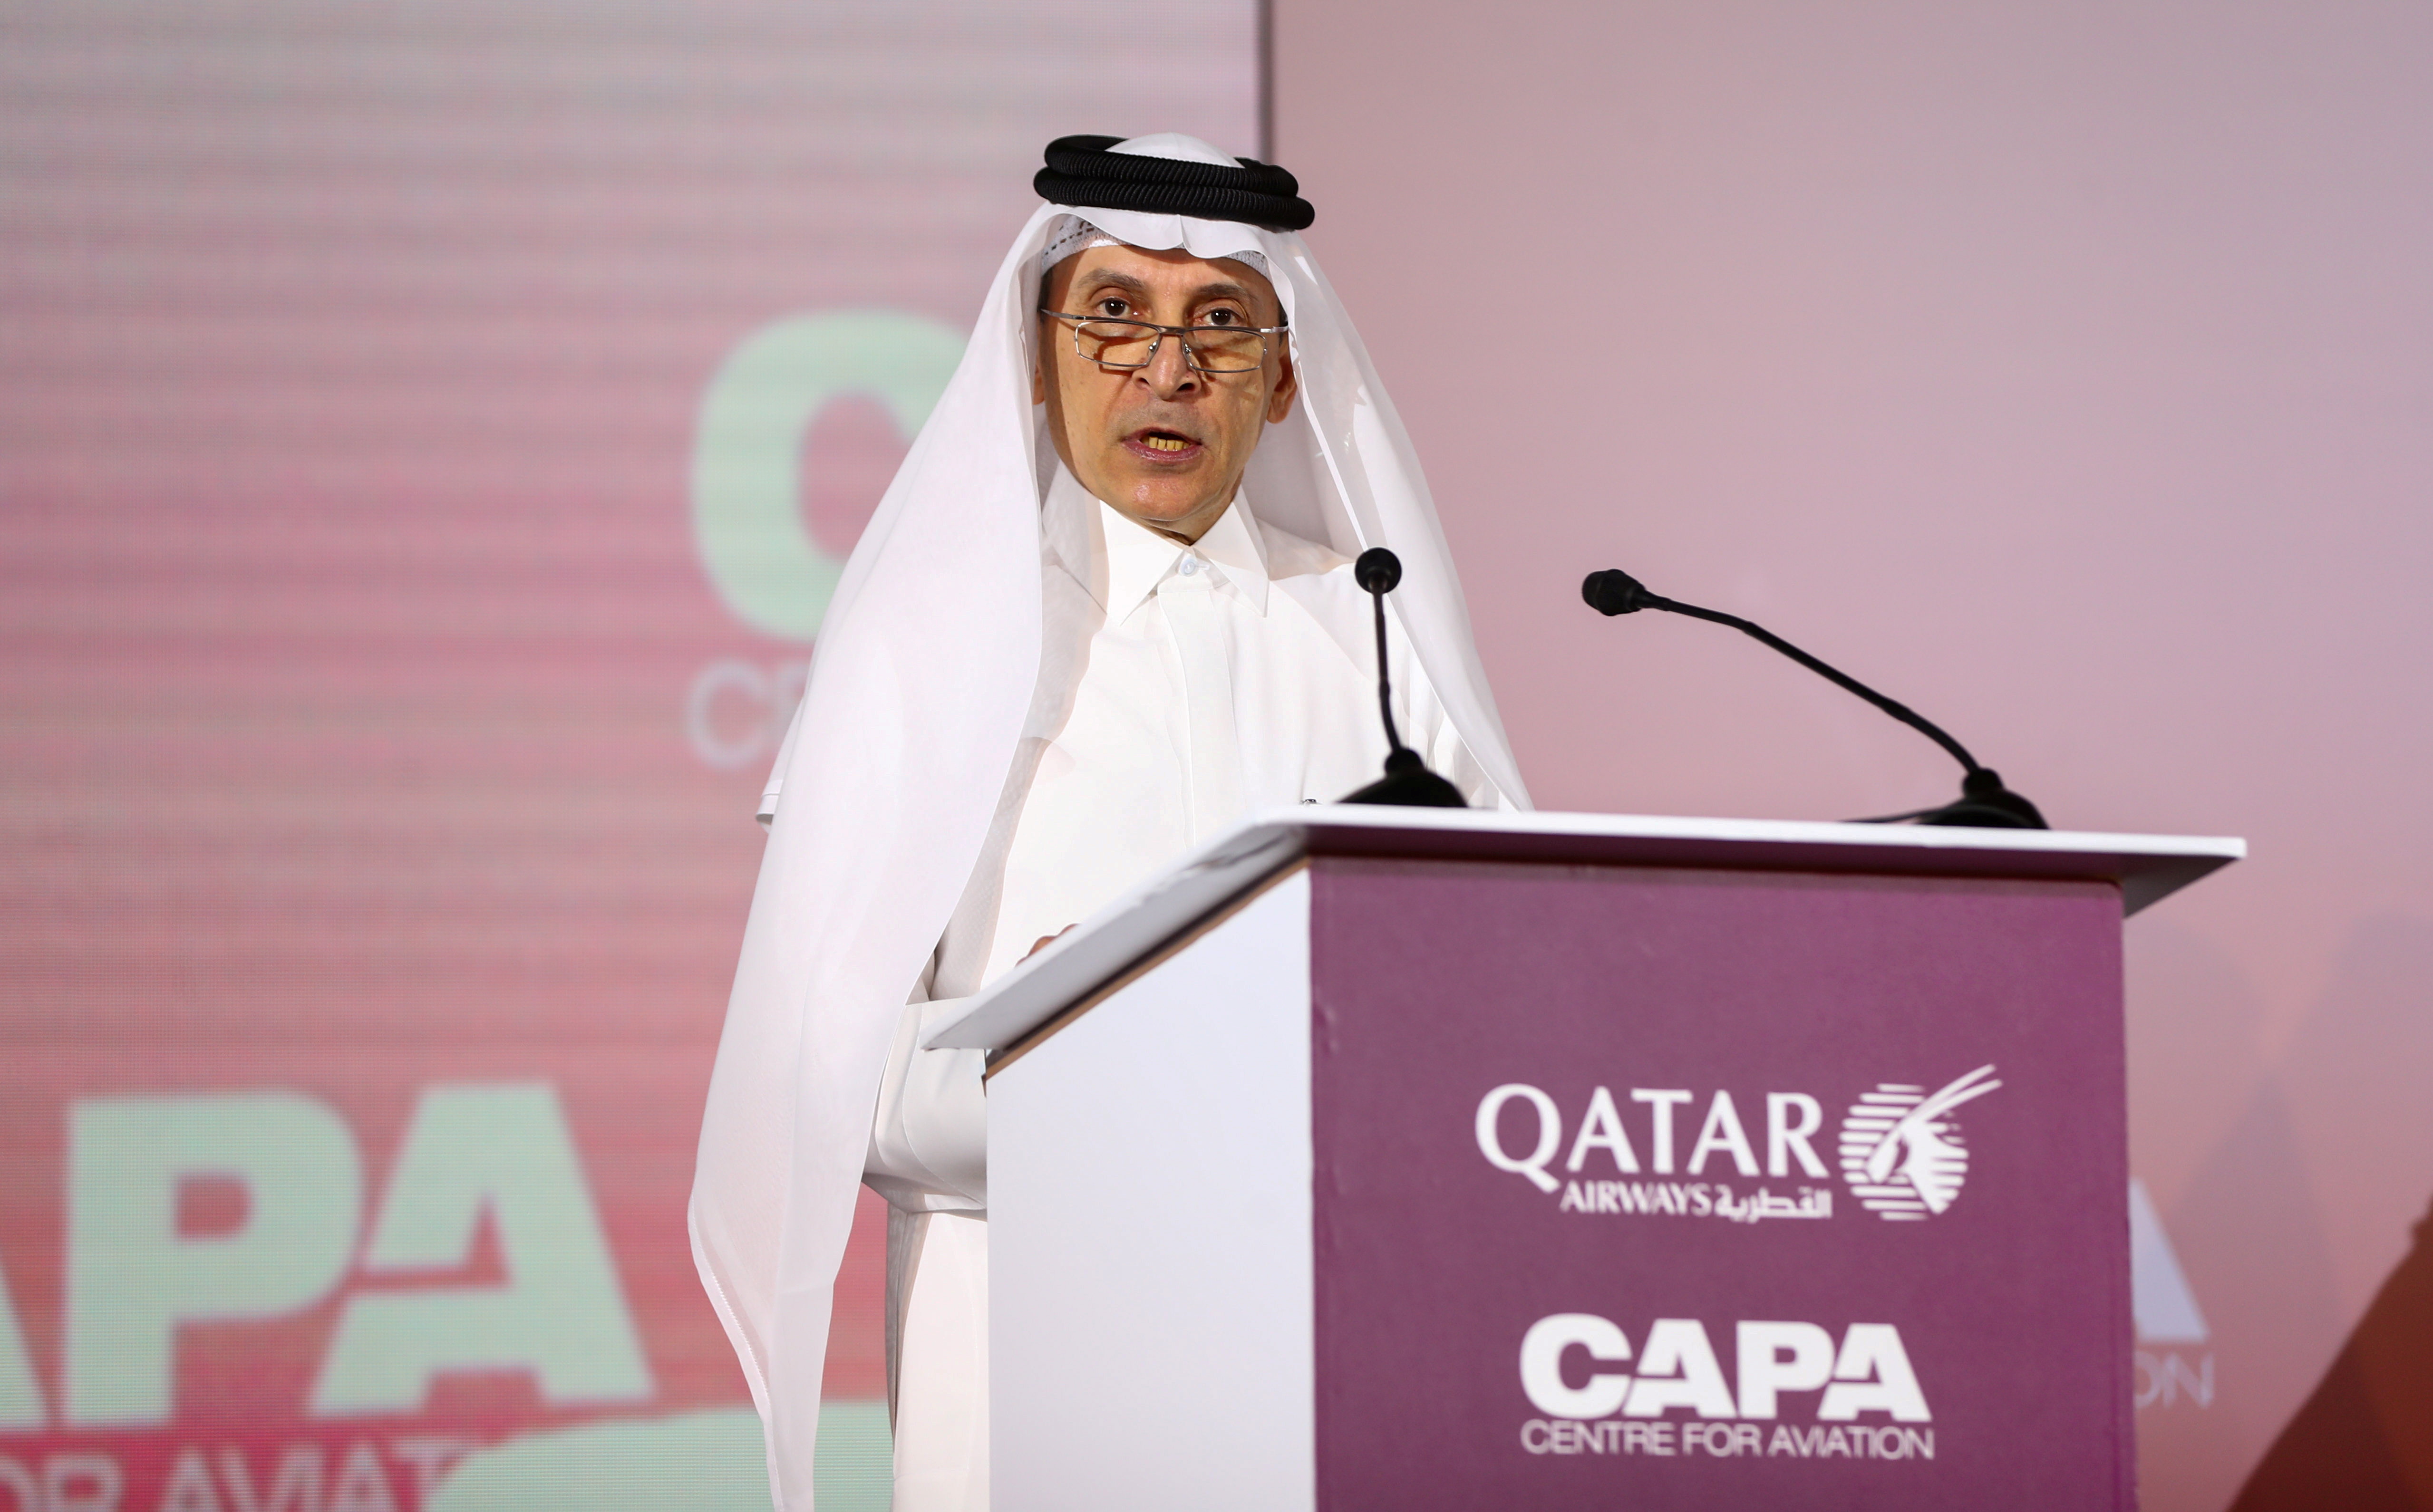 Qatar Airway's Chief Executive Officer, Akbar Al Baker speaks in a welcome speech at Qatar aviation conference, in Doha, Qatar February 5, 2020. REUTERS/Ibraheem al Omari